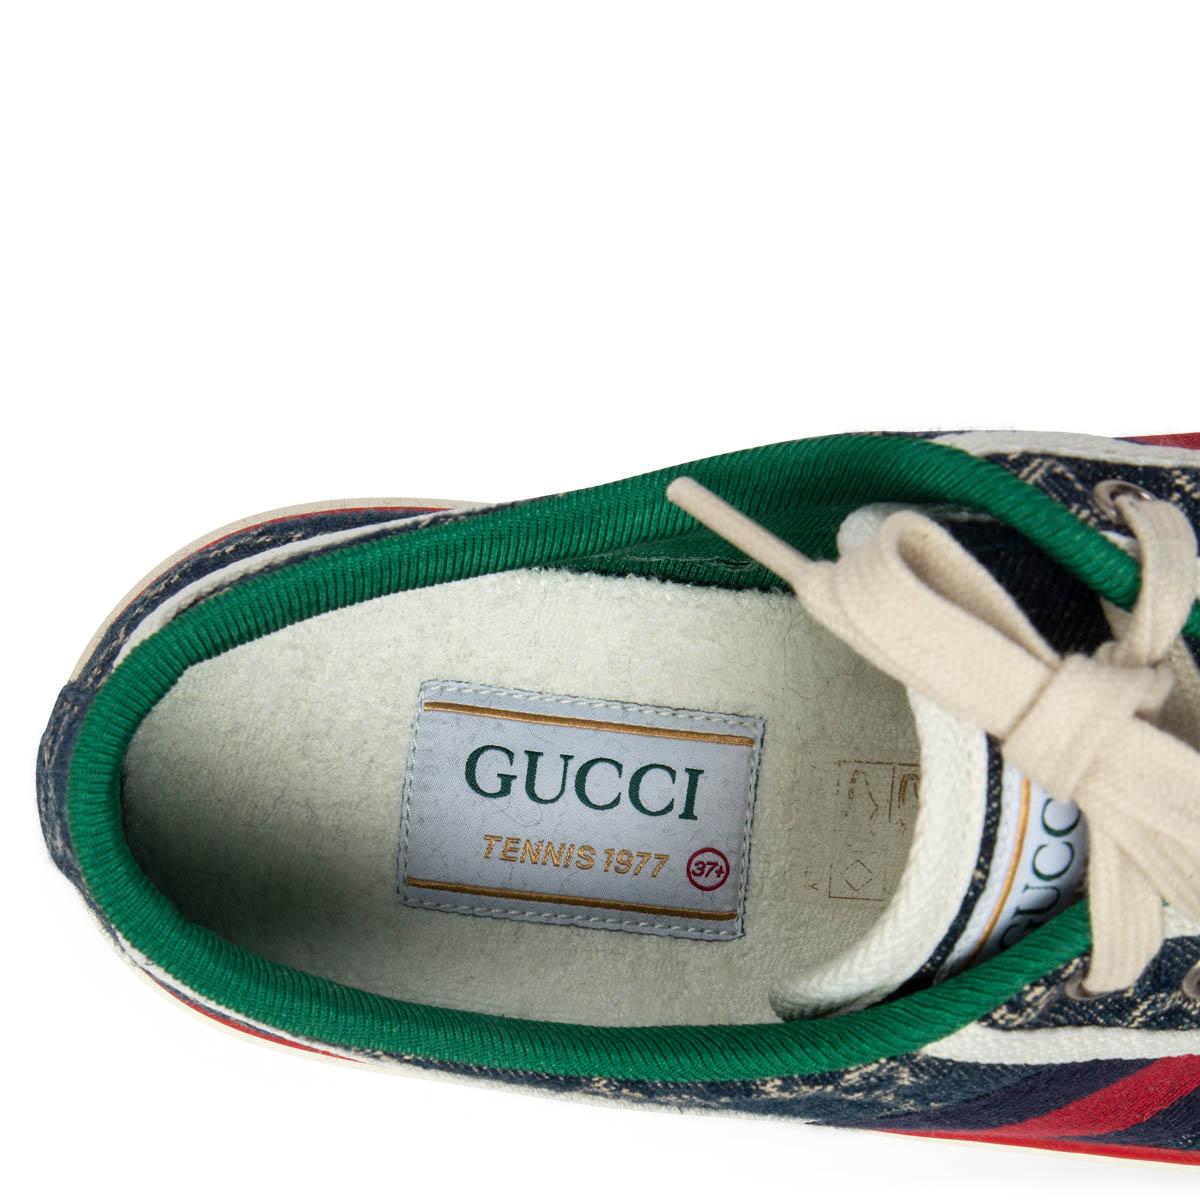 Beige GUCCI blue GG TENNIS 1977 Sneakers GG Denim Shoes 37.5